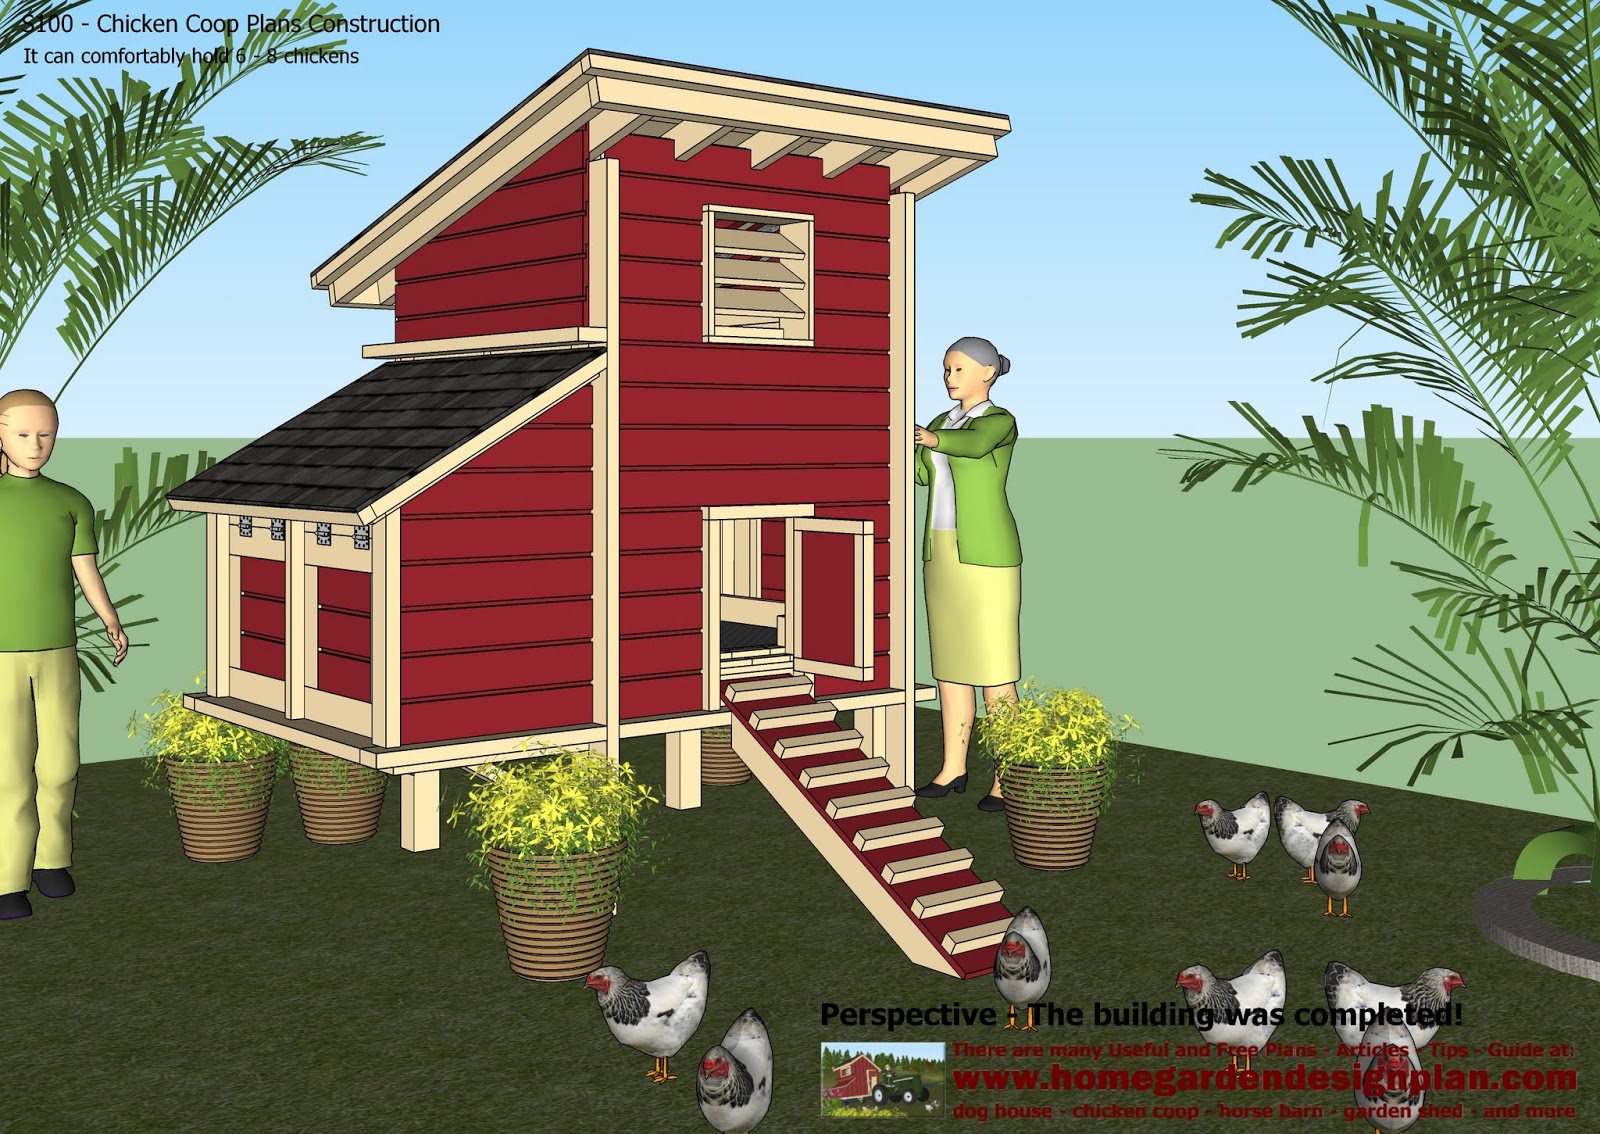 Chicken+Coop+Plans+Construction+-+Chicken+Coop+Design+-+How+To+Build ...